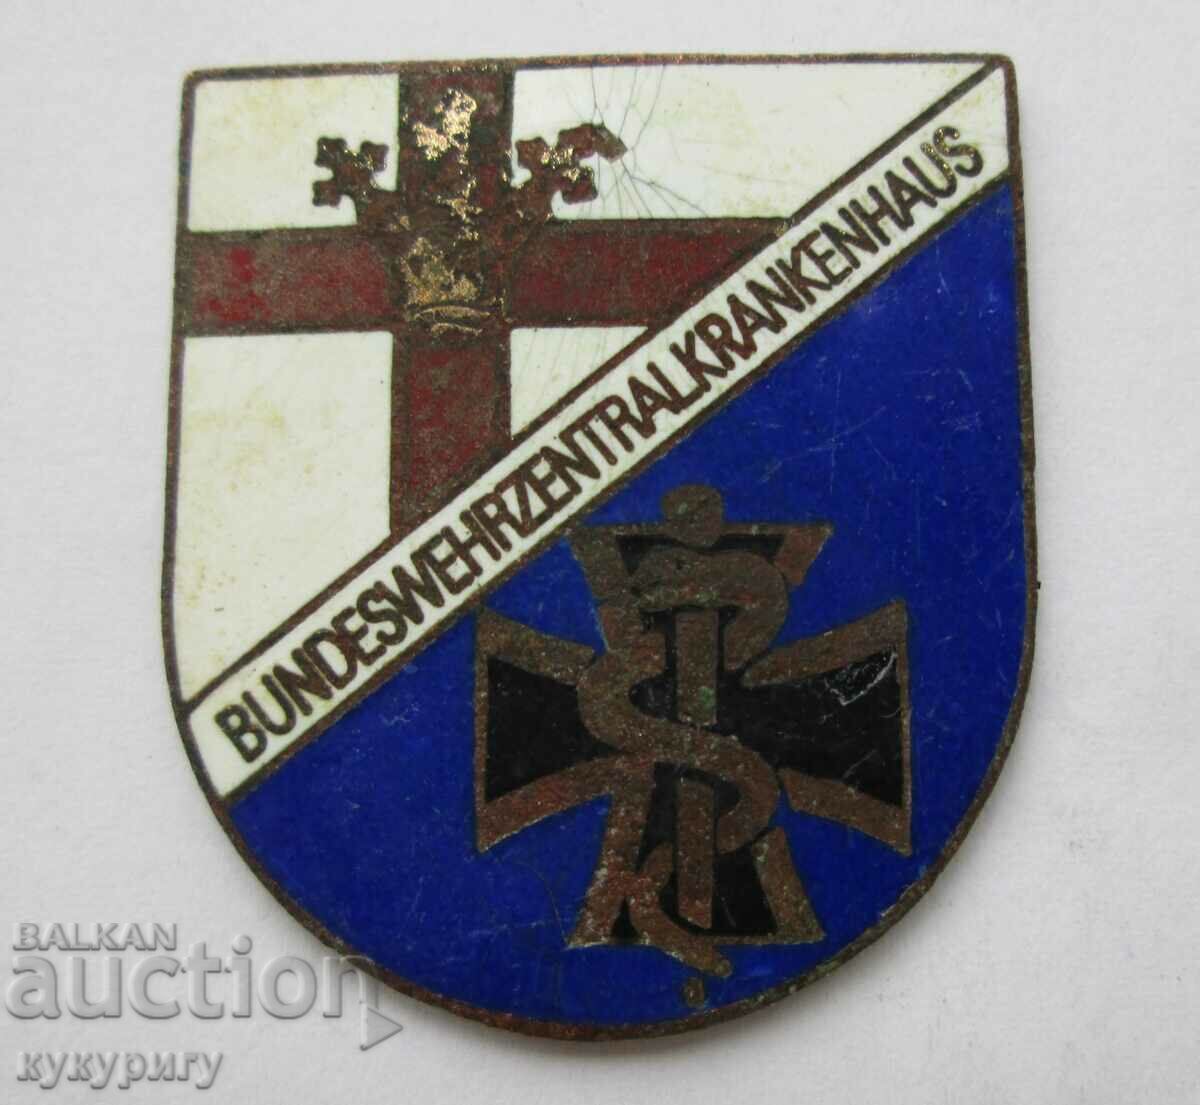 Old German military medical badge with enamel